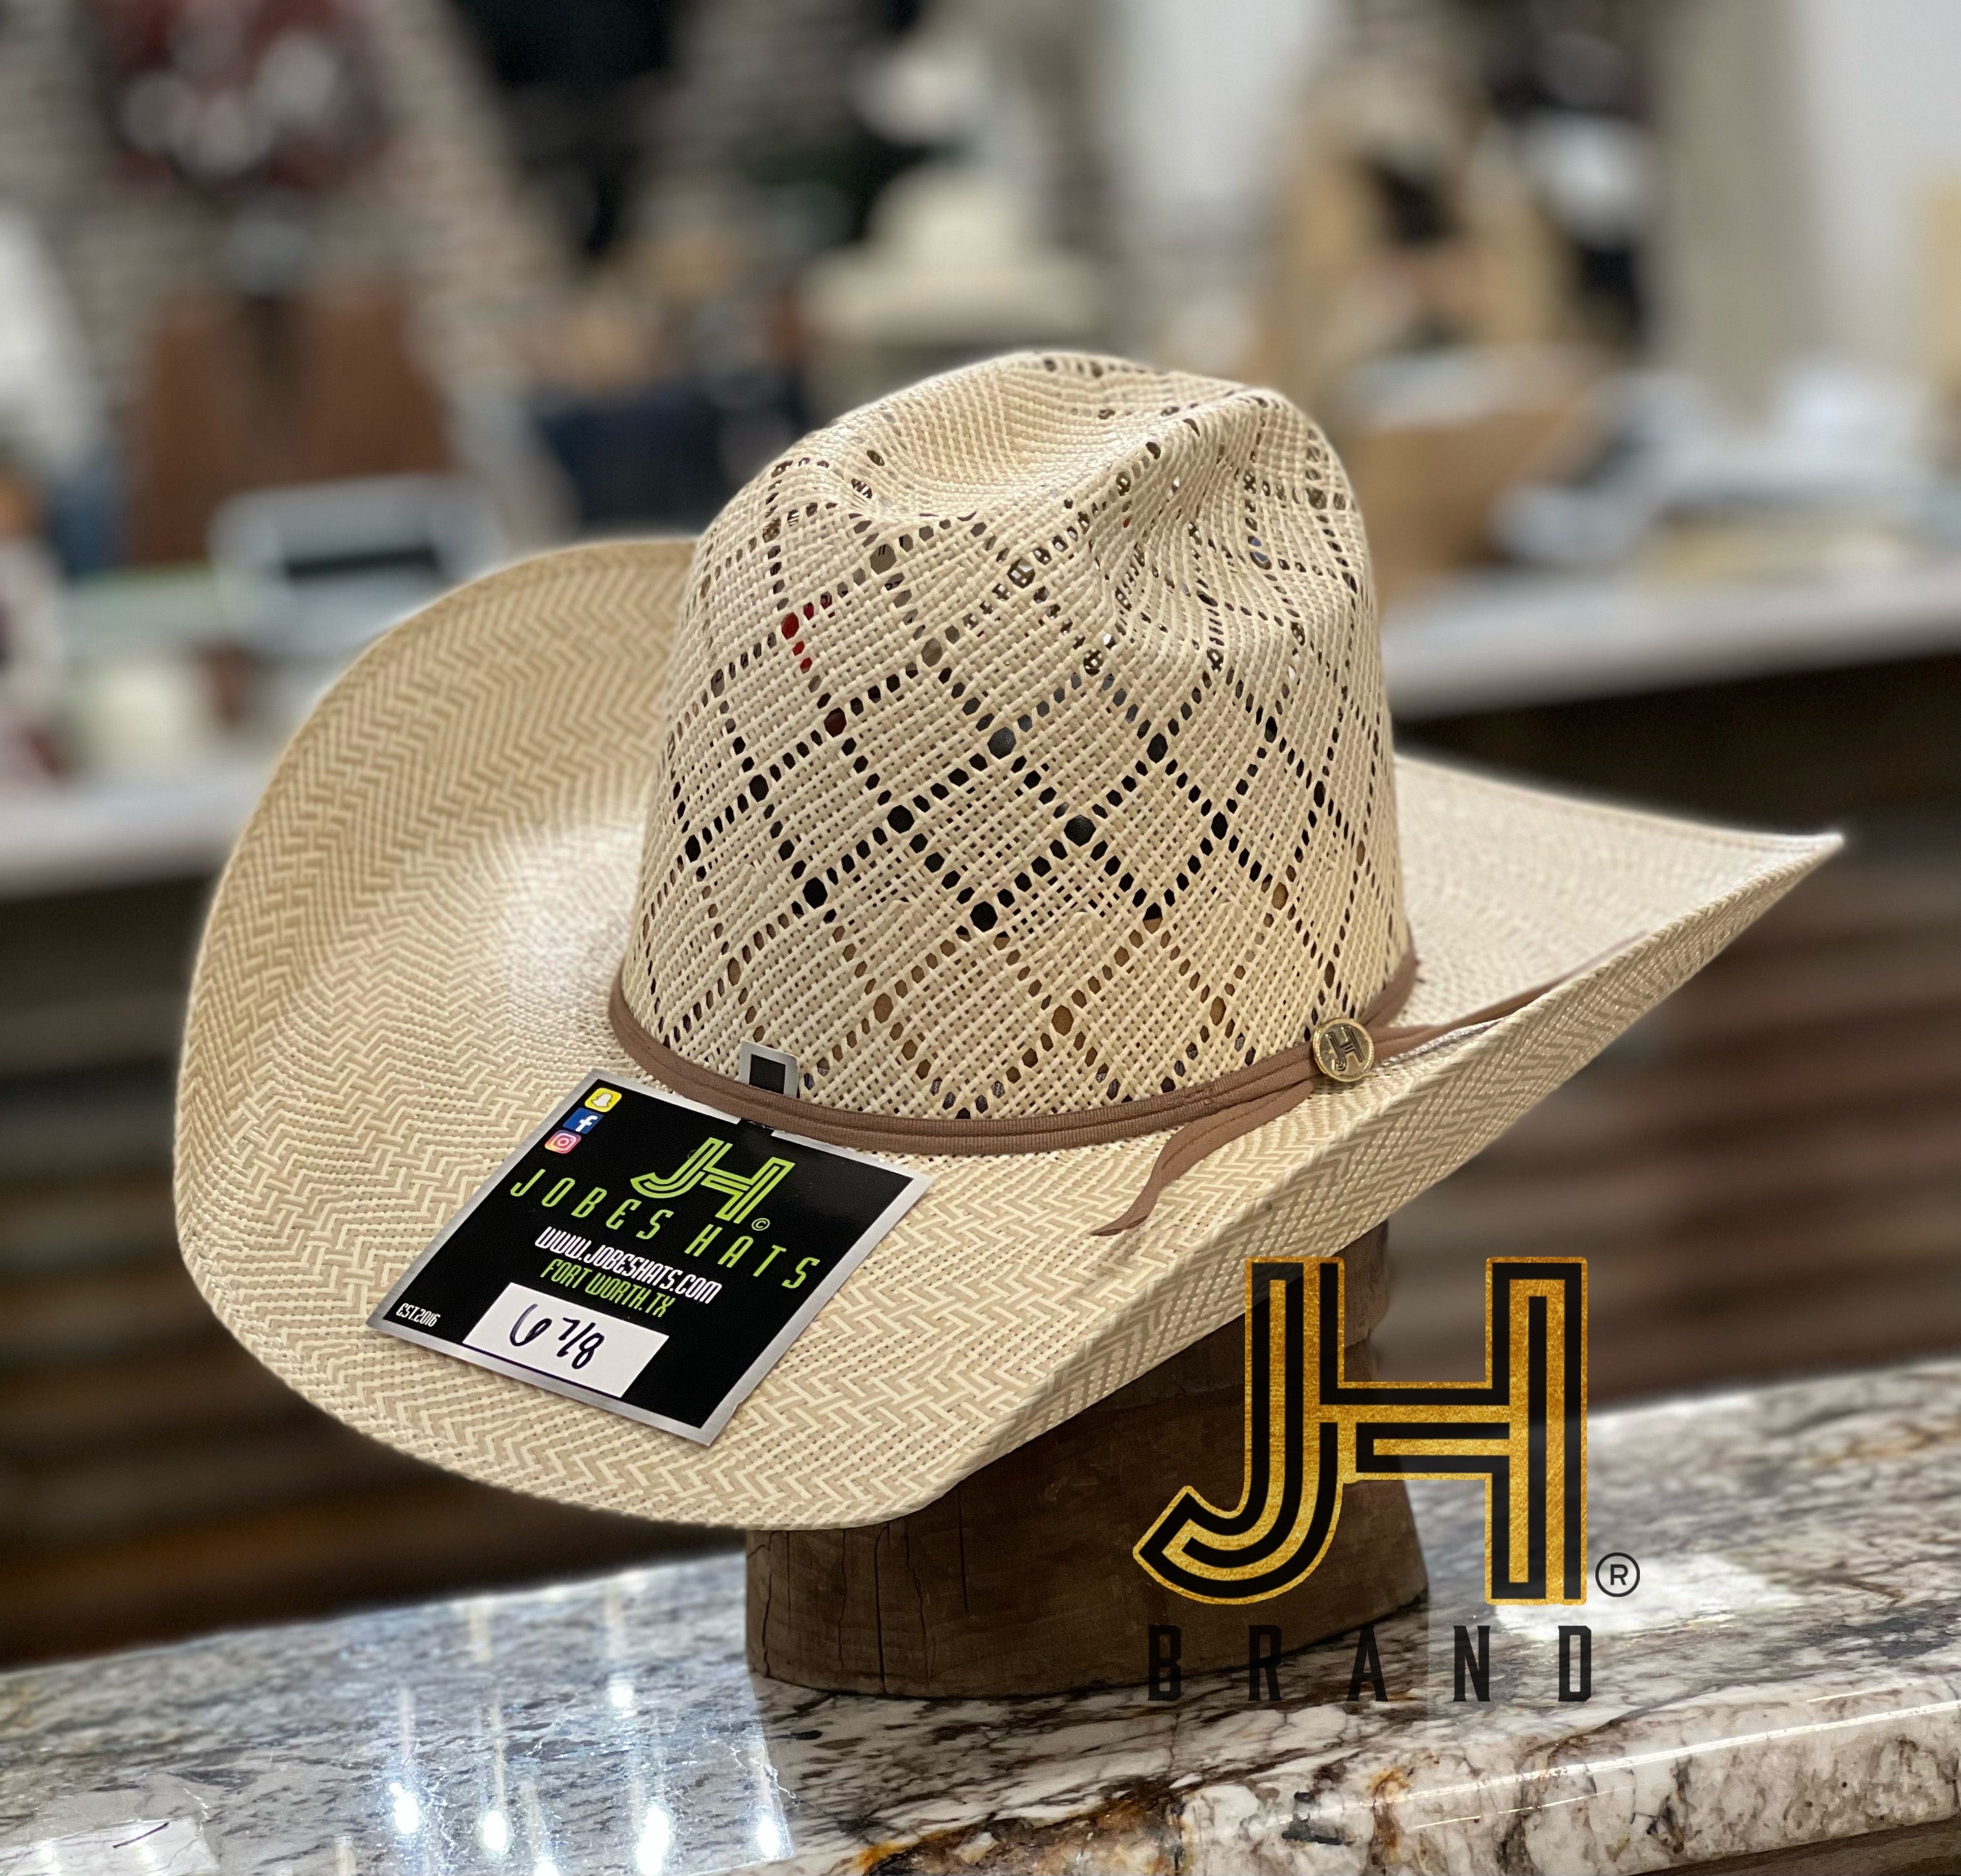 2020 Jobes Hats Straw Hat “Tornado” 4” Brim